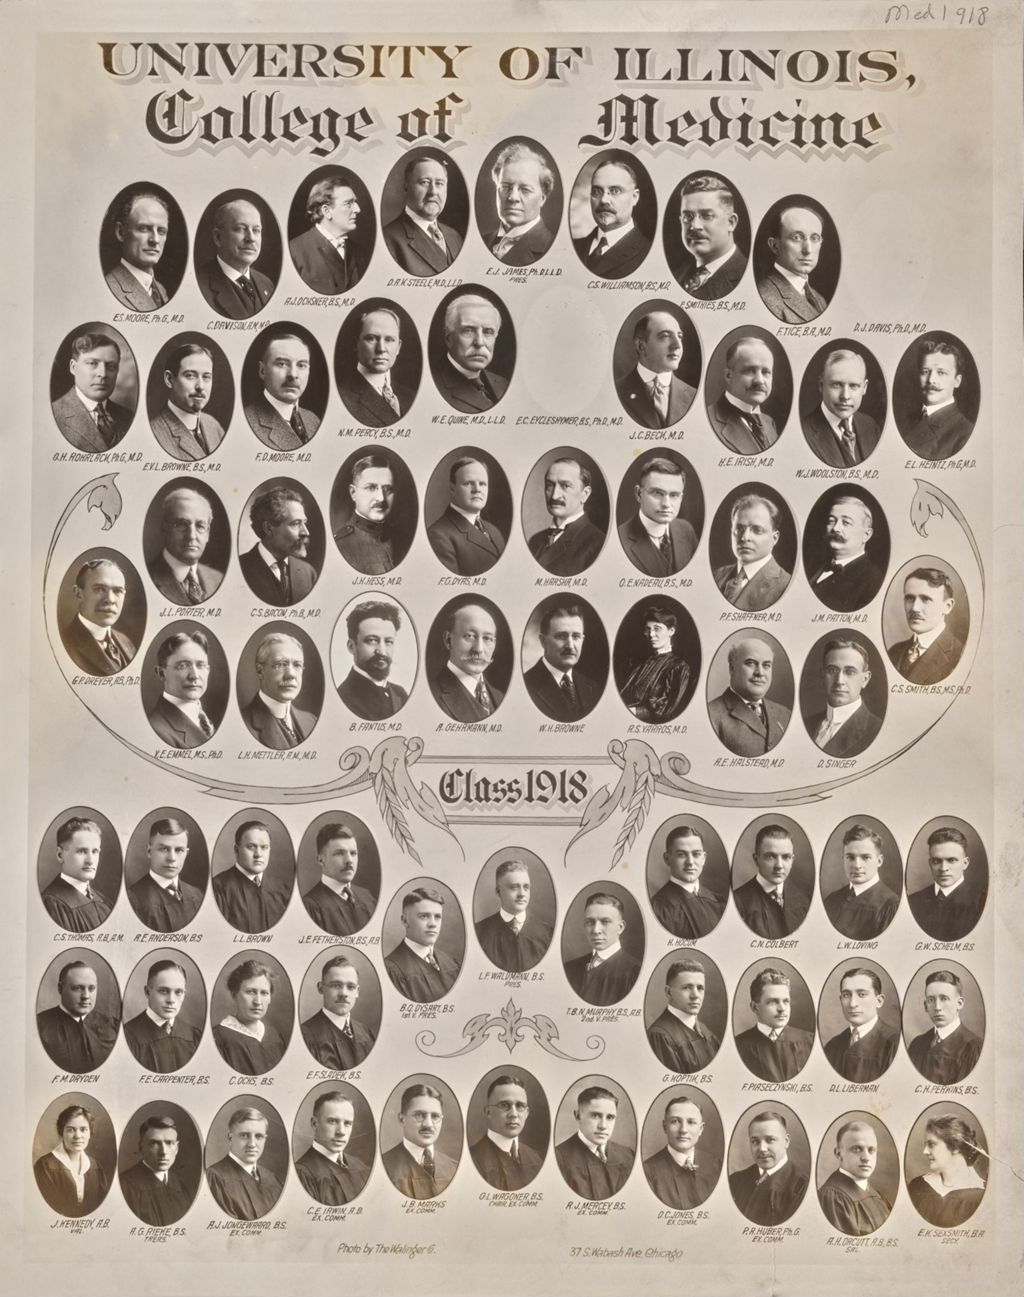 Miniature of 1918 graduating class, University of Illinois College of Medicine